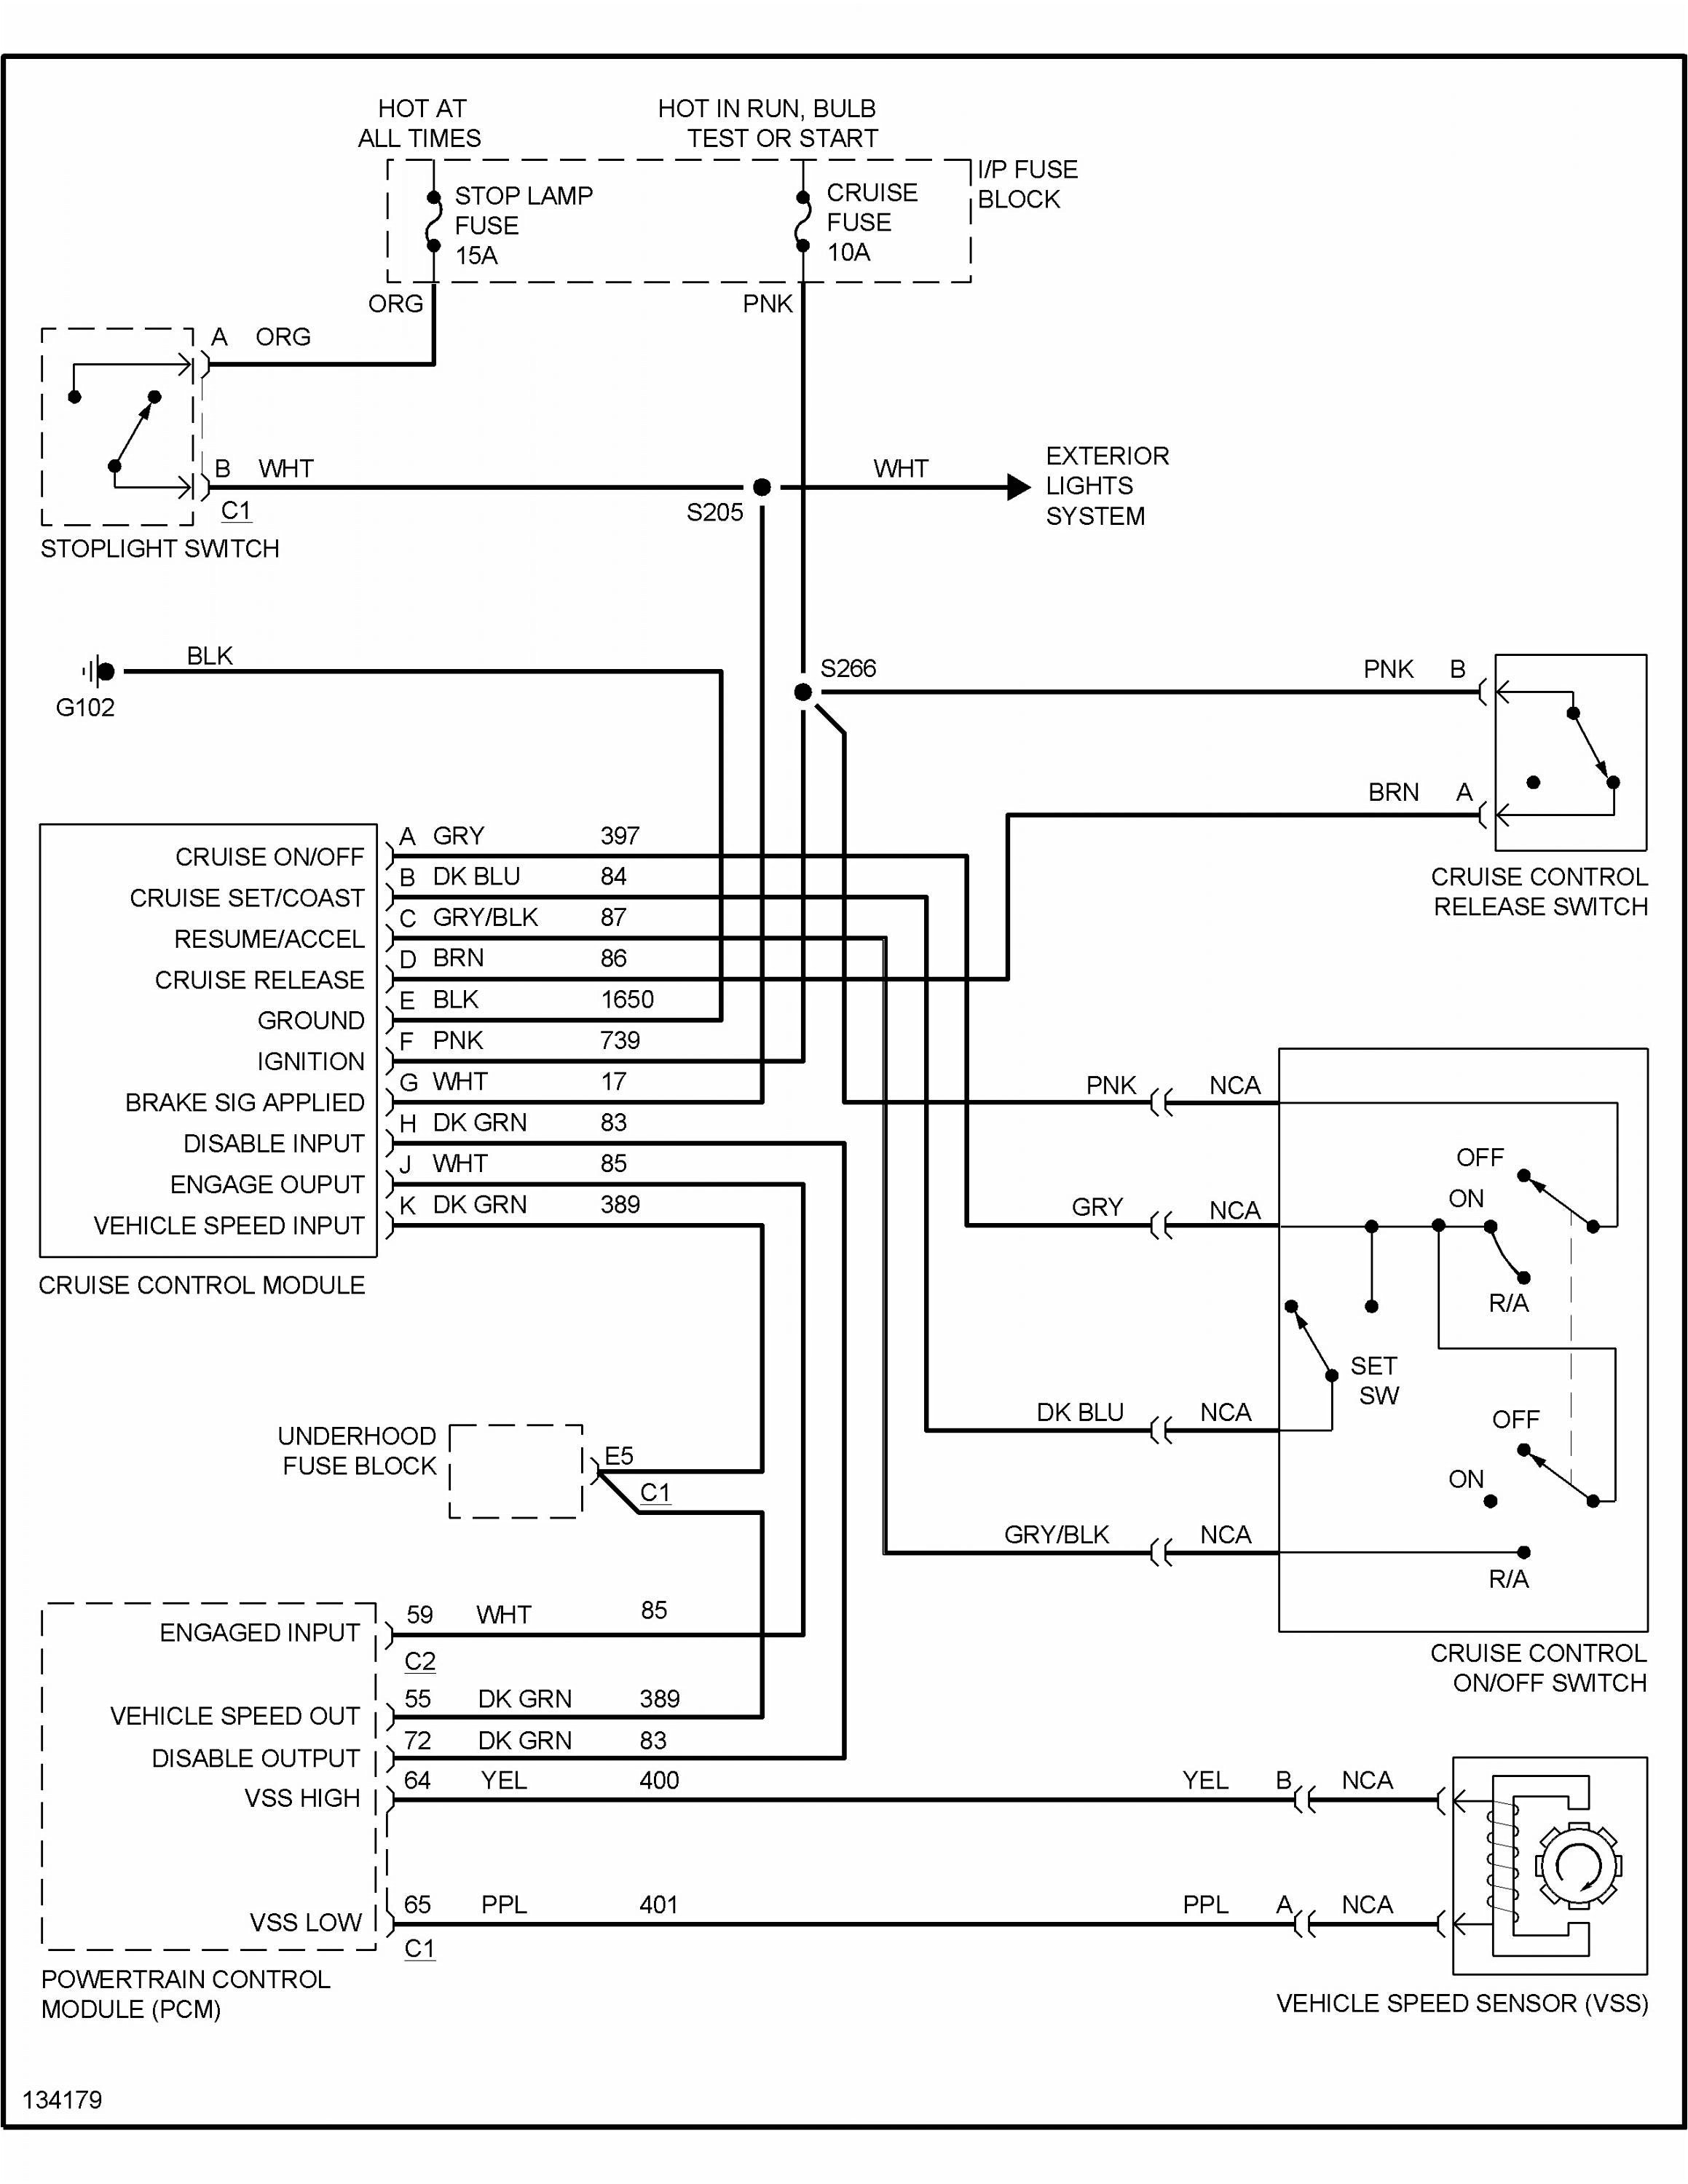 wiring diagram as well sony xplod wiring harness diagram further sony xplod cdx 710 wiring diagram